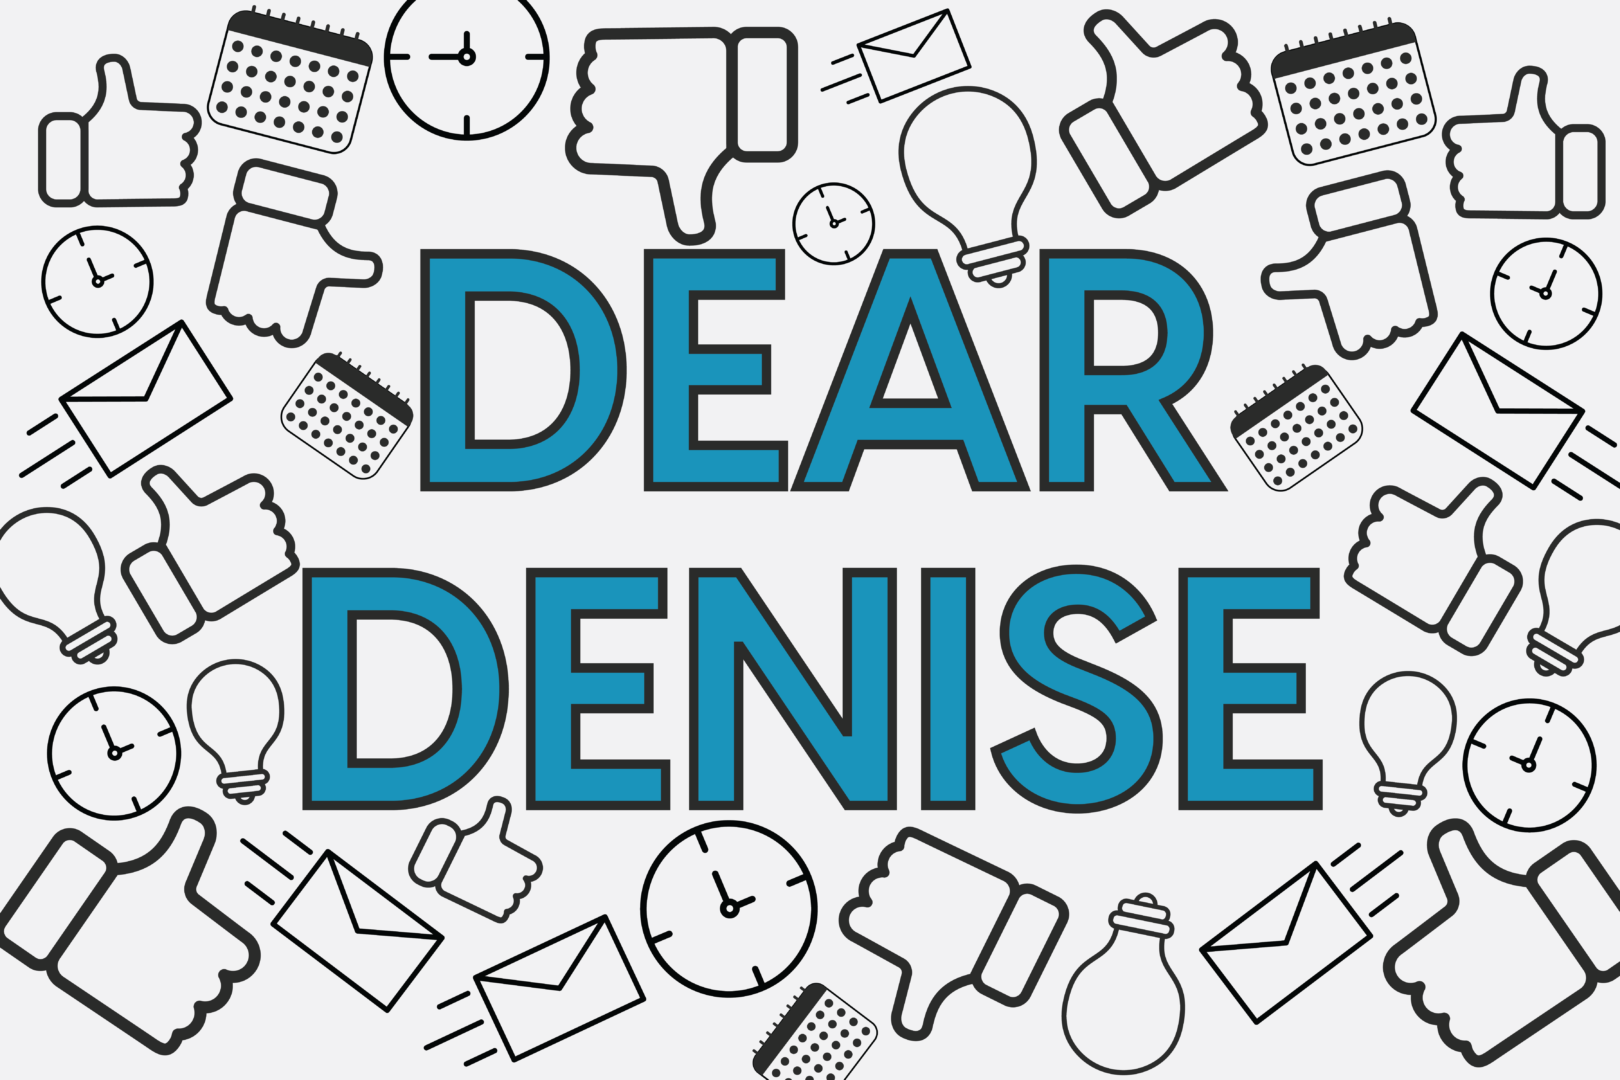 Dear Denise